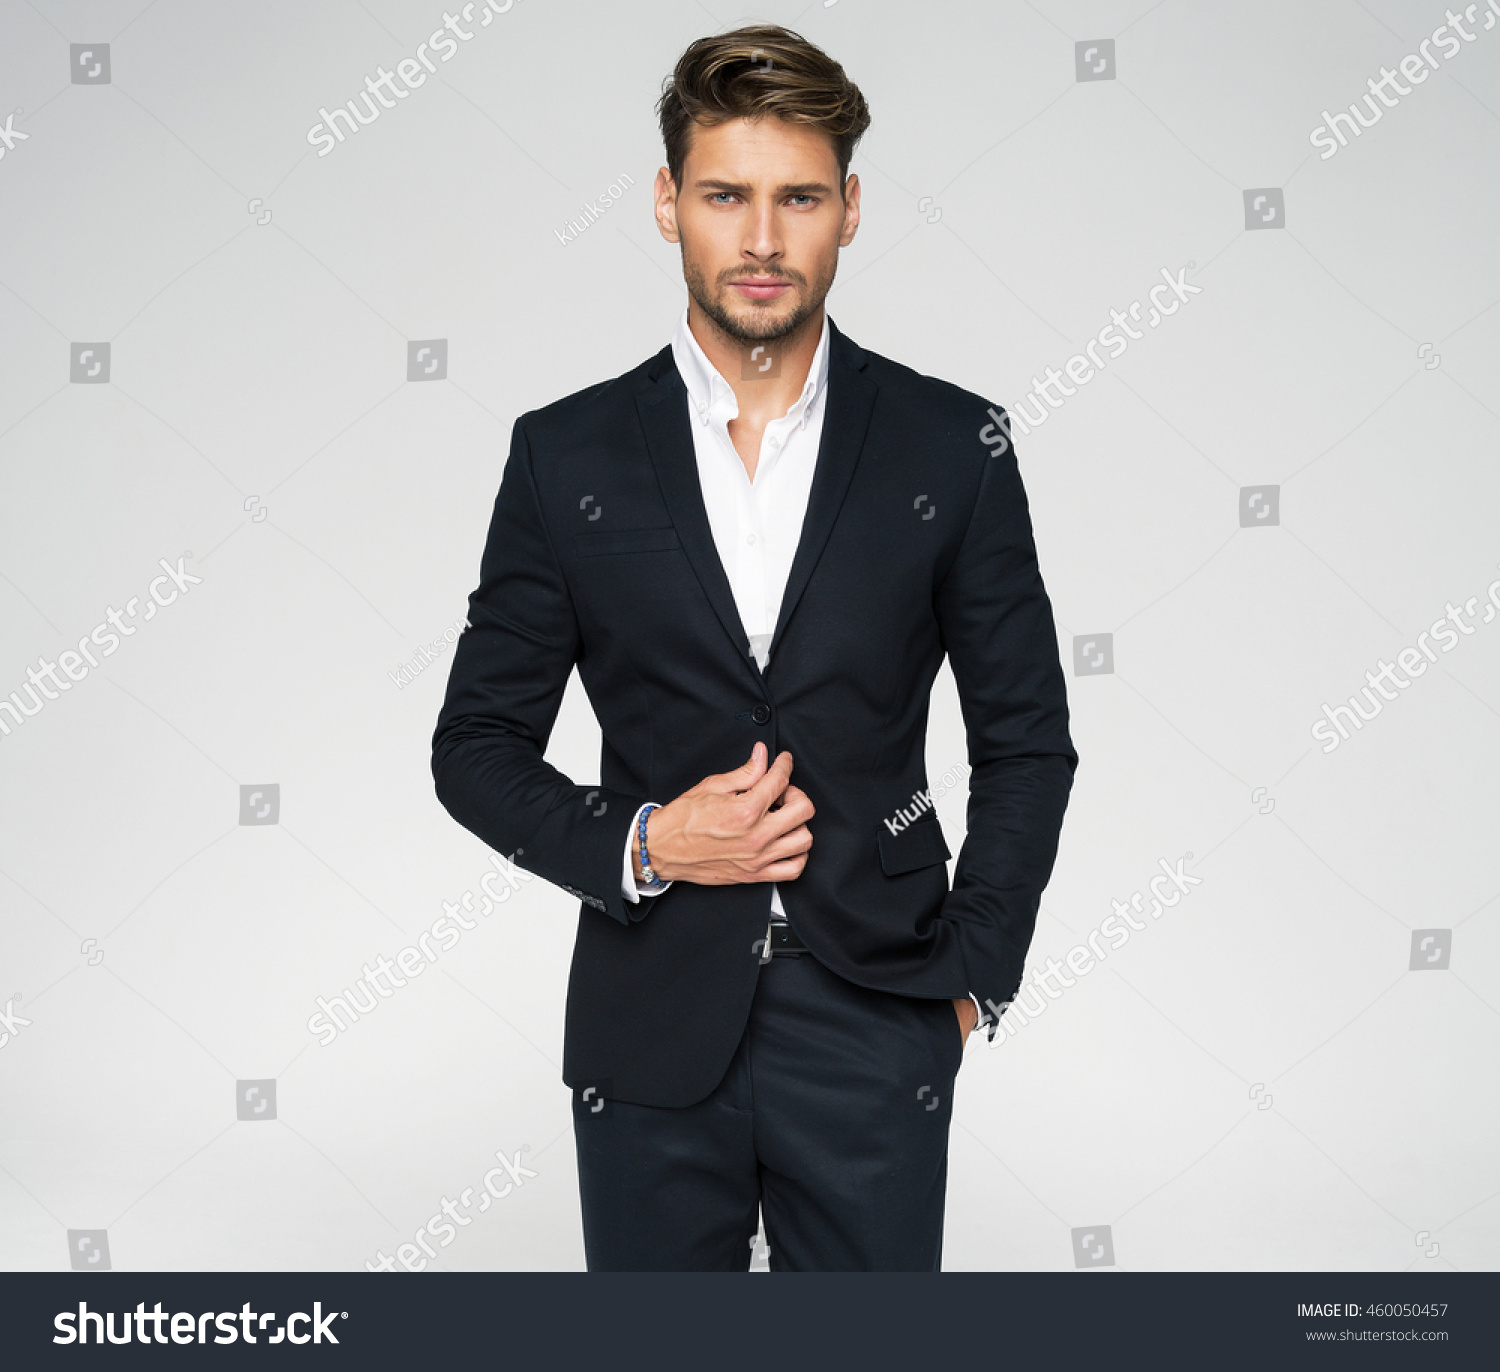 Portrait of handsome man in black suit #460050457